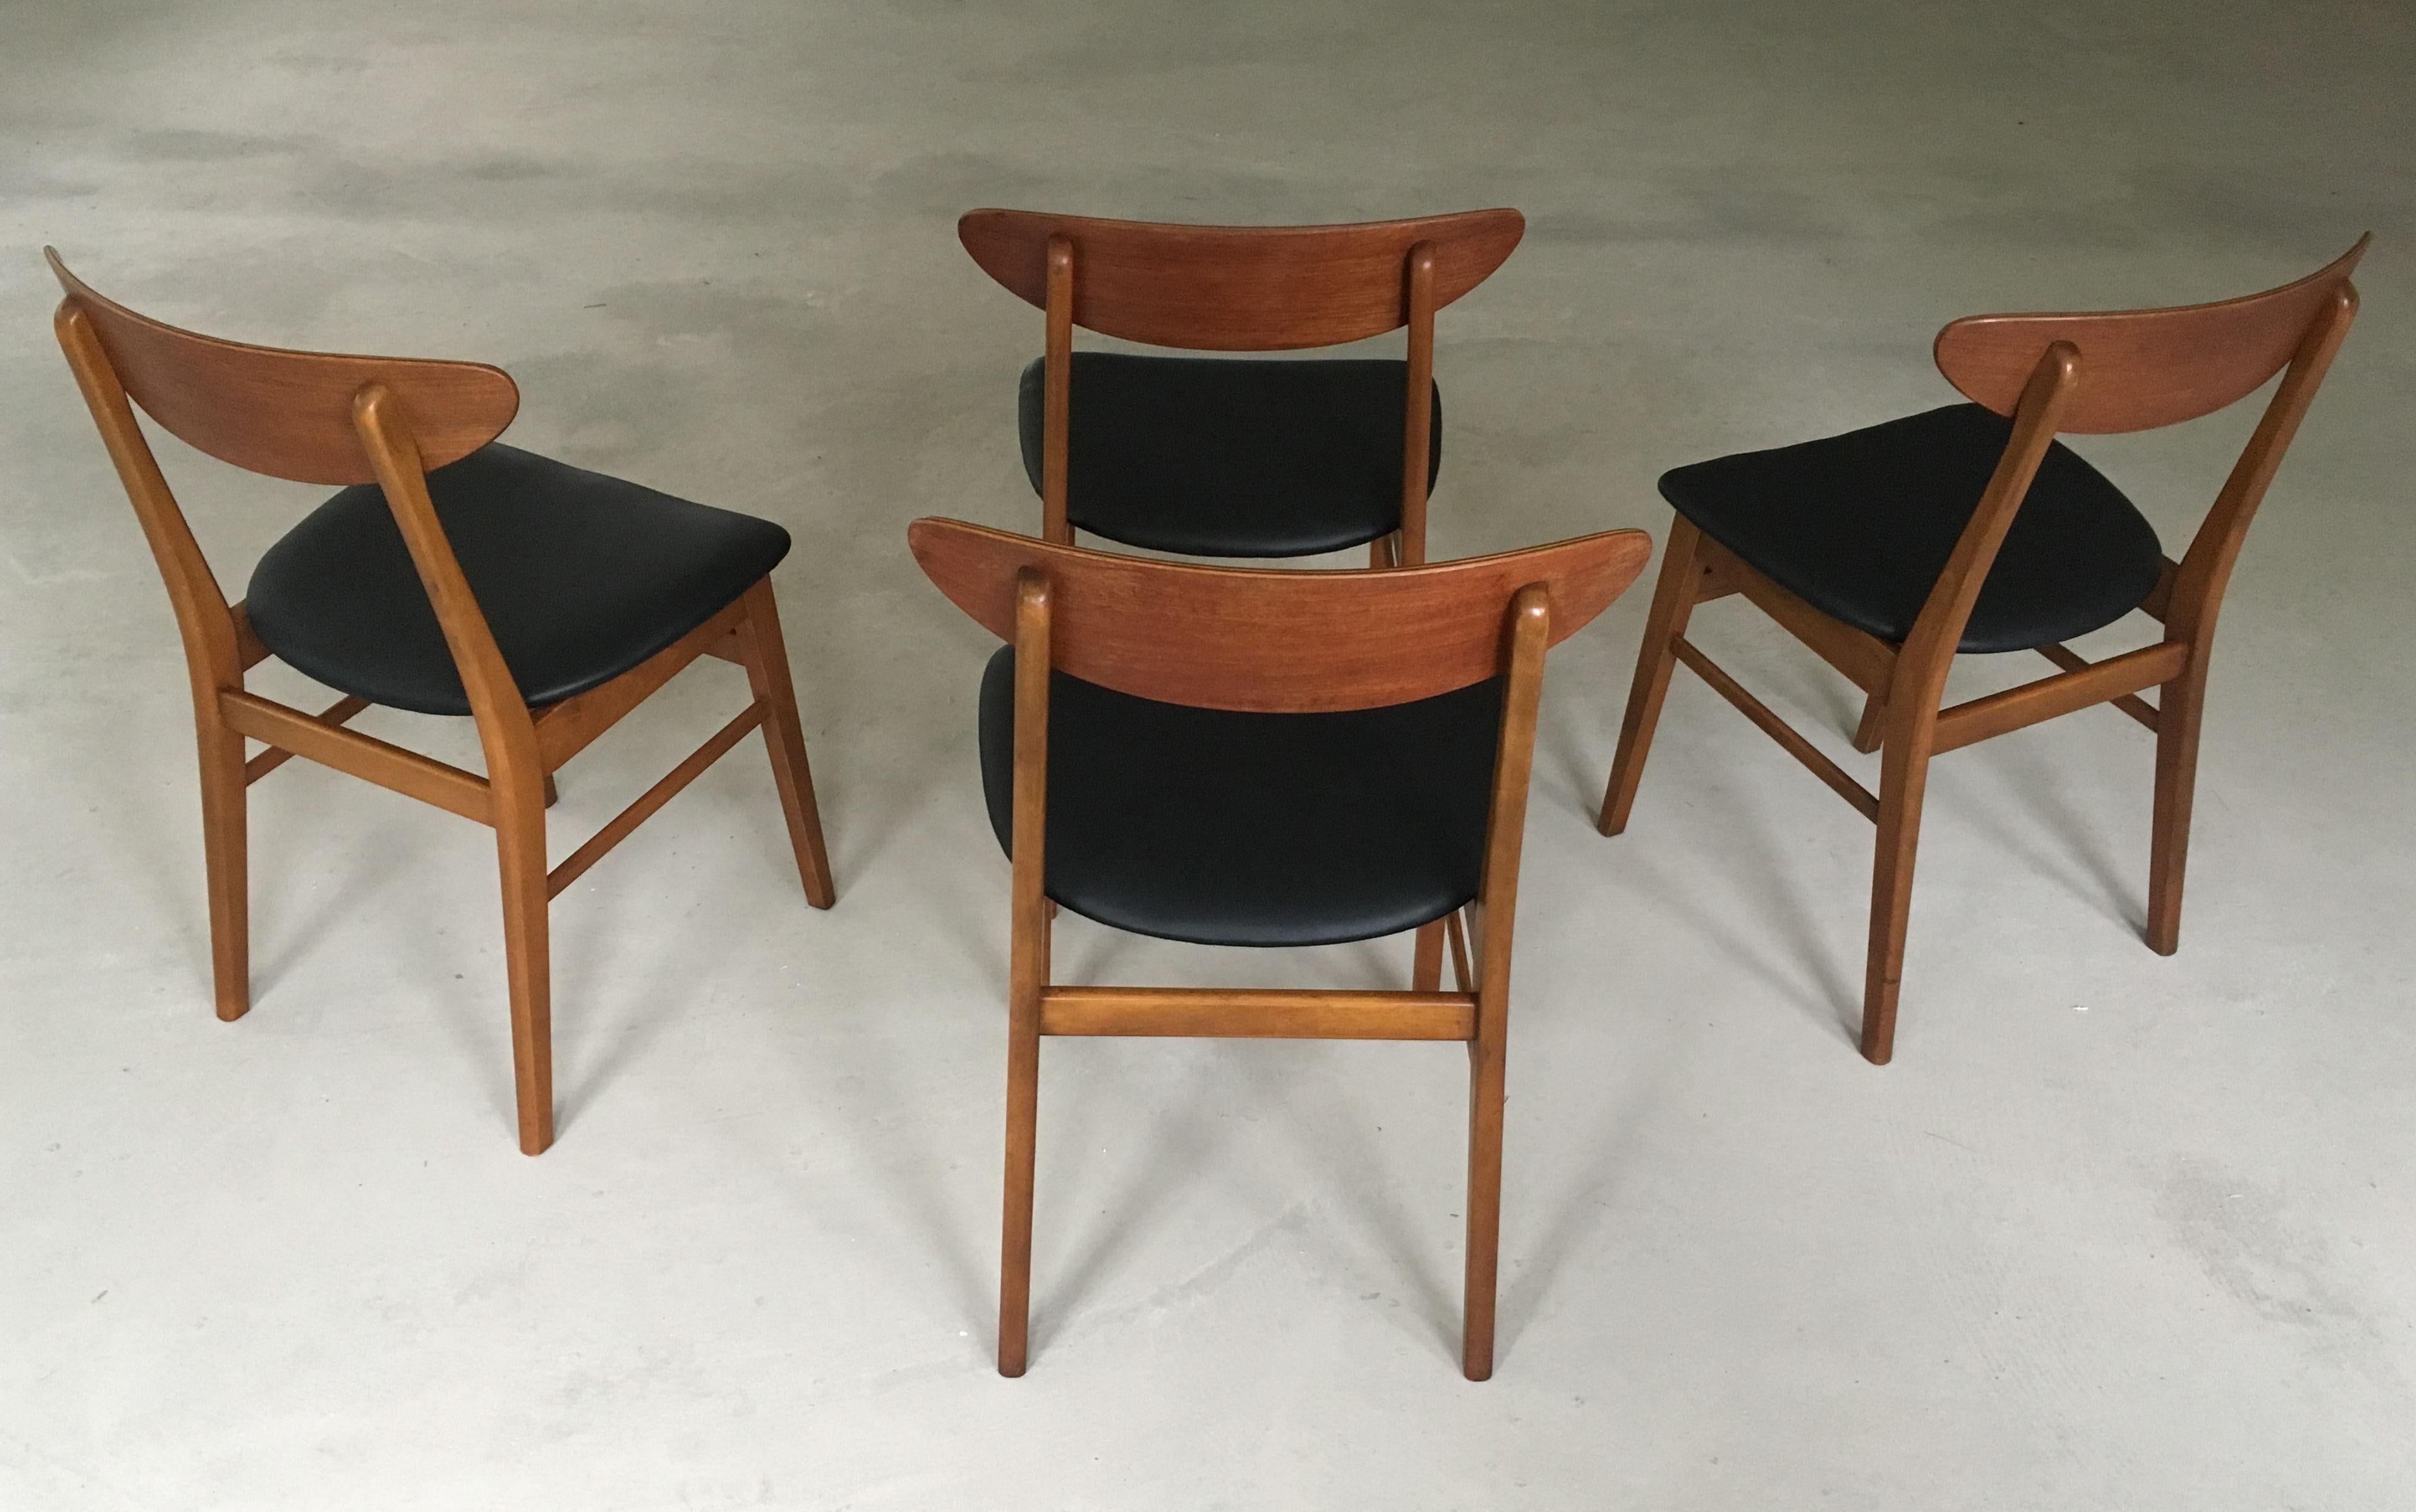 1960s teak dining chairs